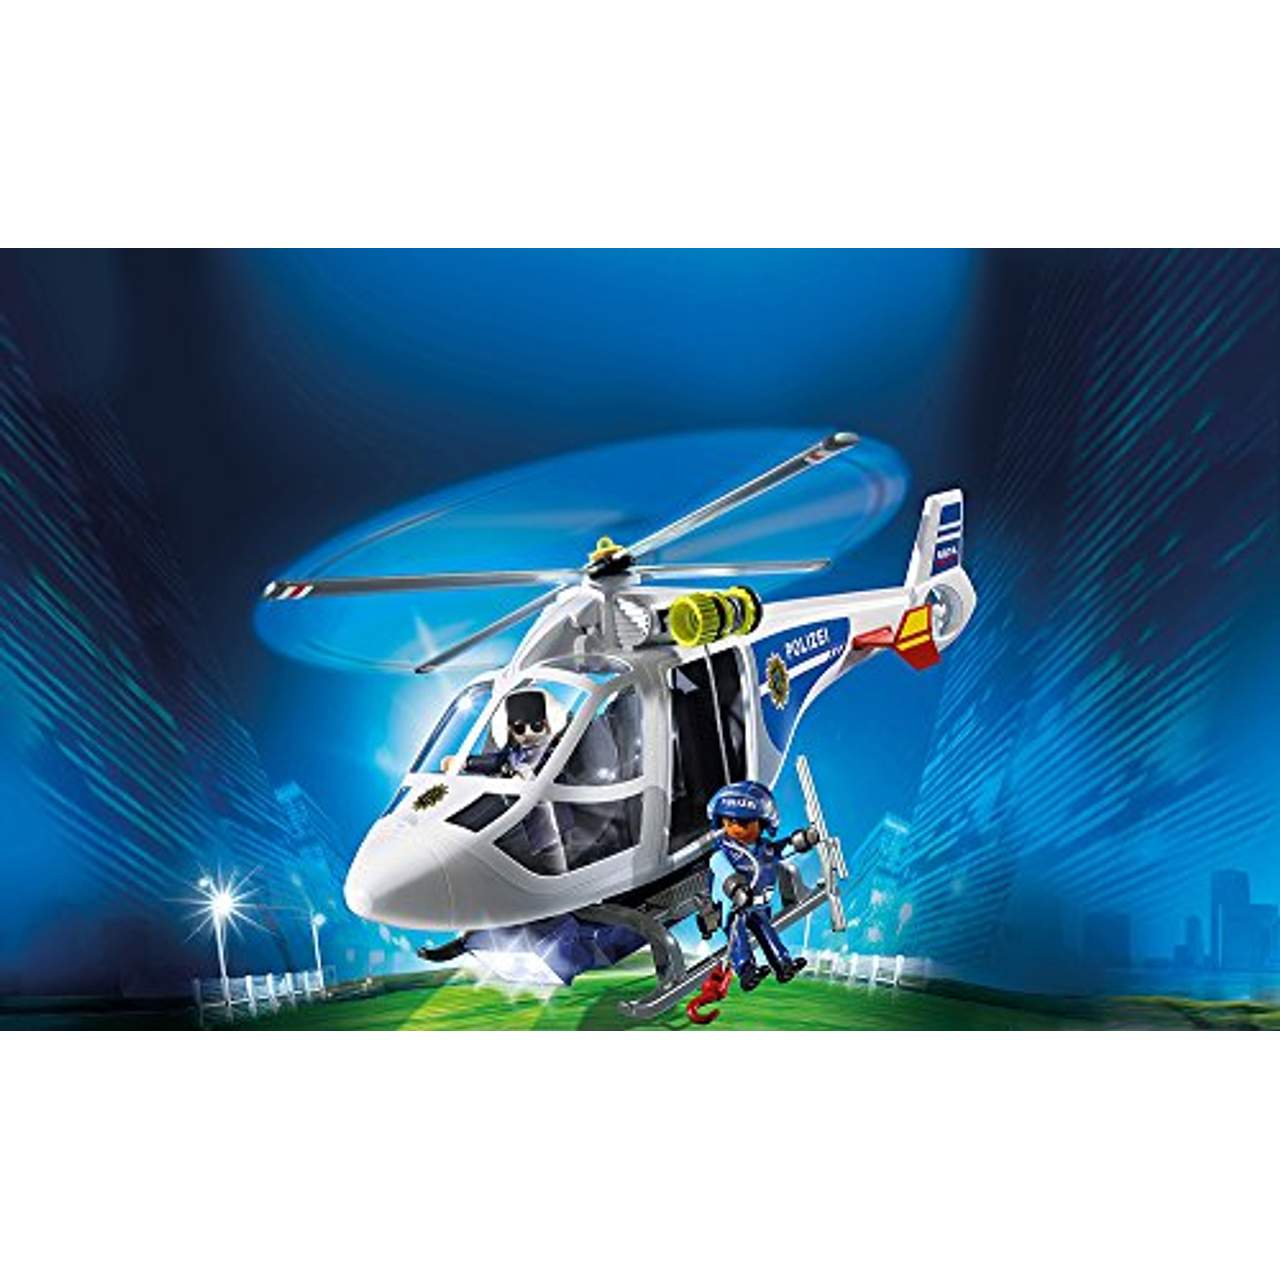 Playmobil 6874 Polizei-Helikopter mit LED-Suchscheinwerfer